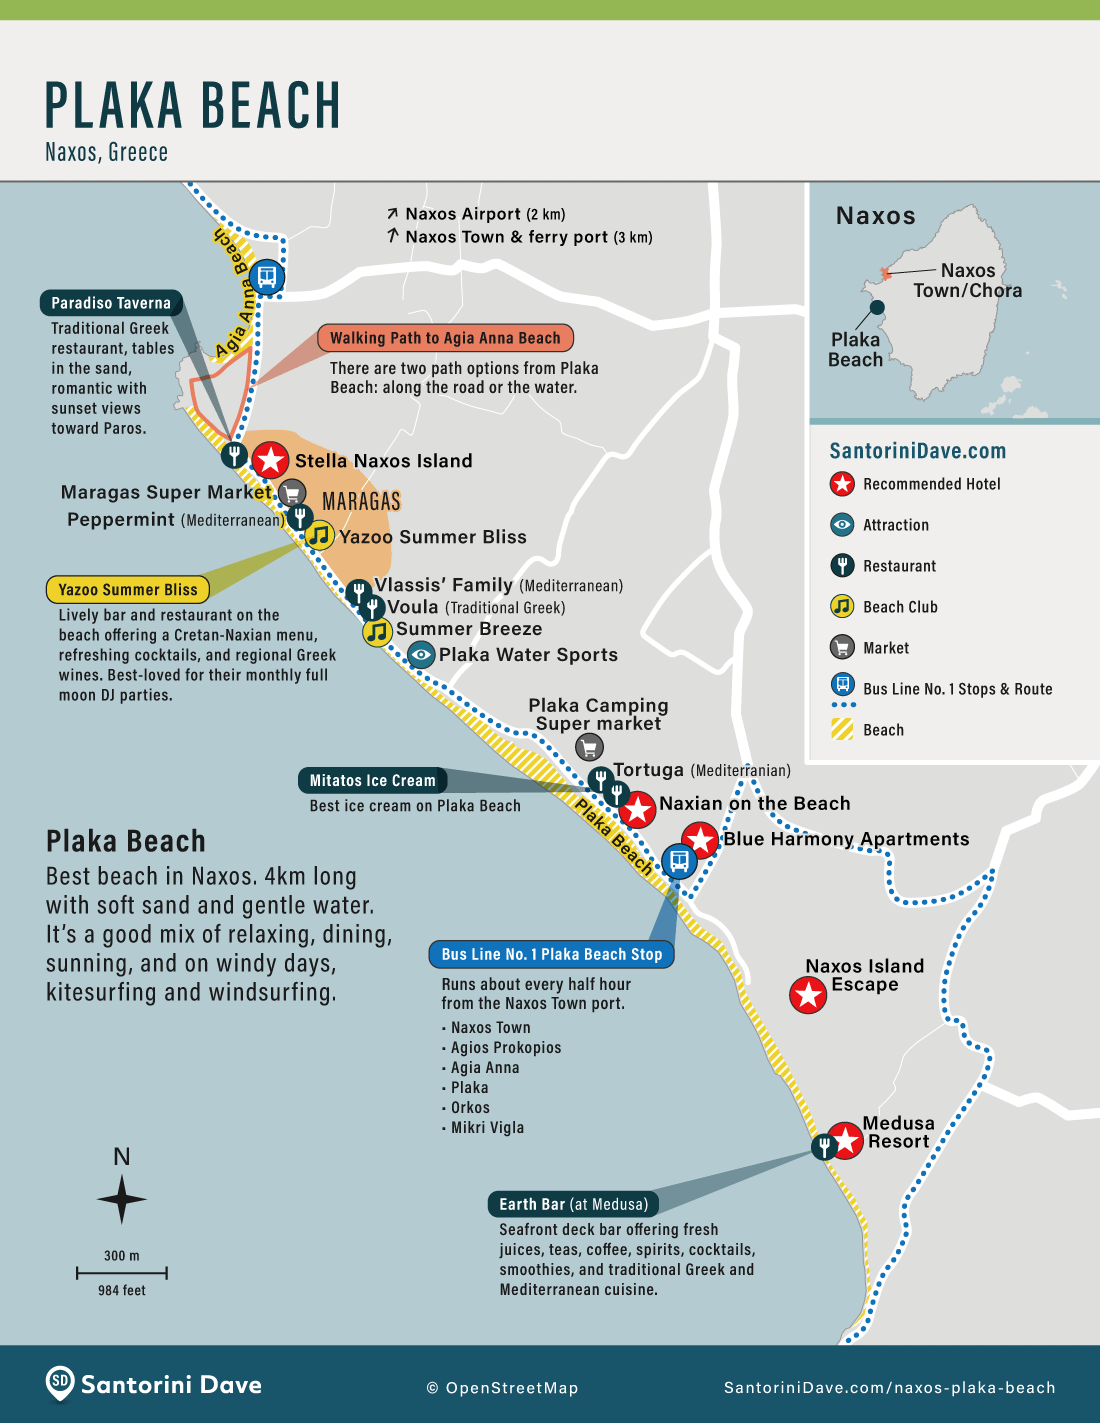 Map of hotels, restaurants, bars, and beach clubs on Plaka Beach in Naxos, Greece.